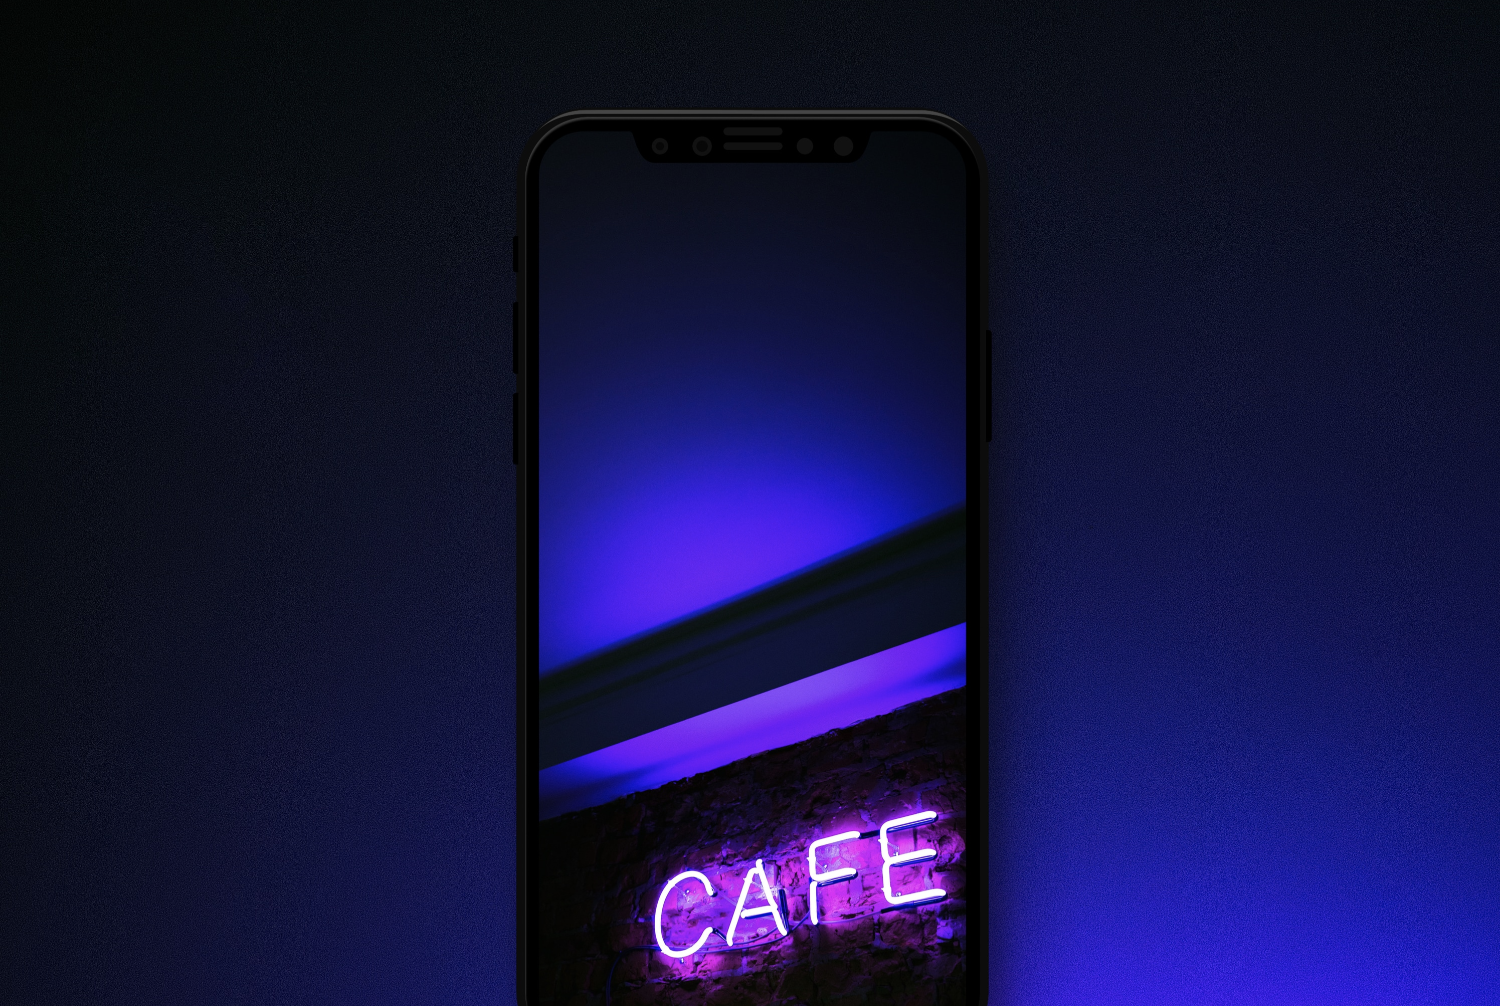 fondos neon para iphone, ipad, android